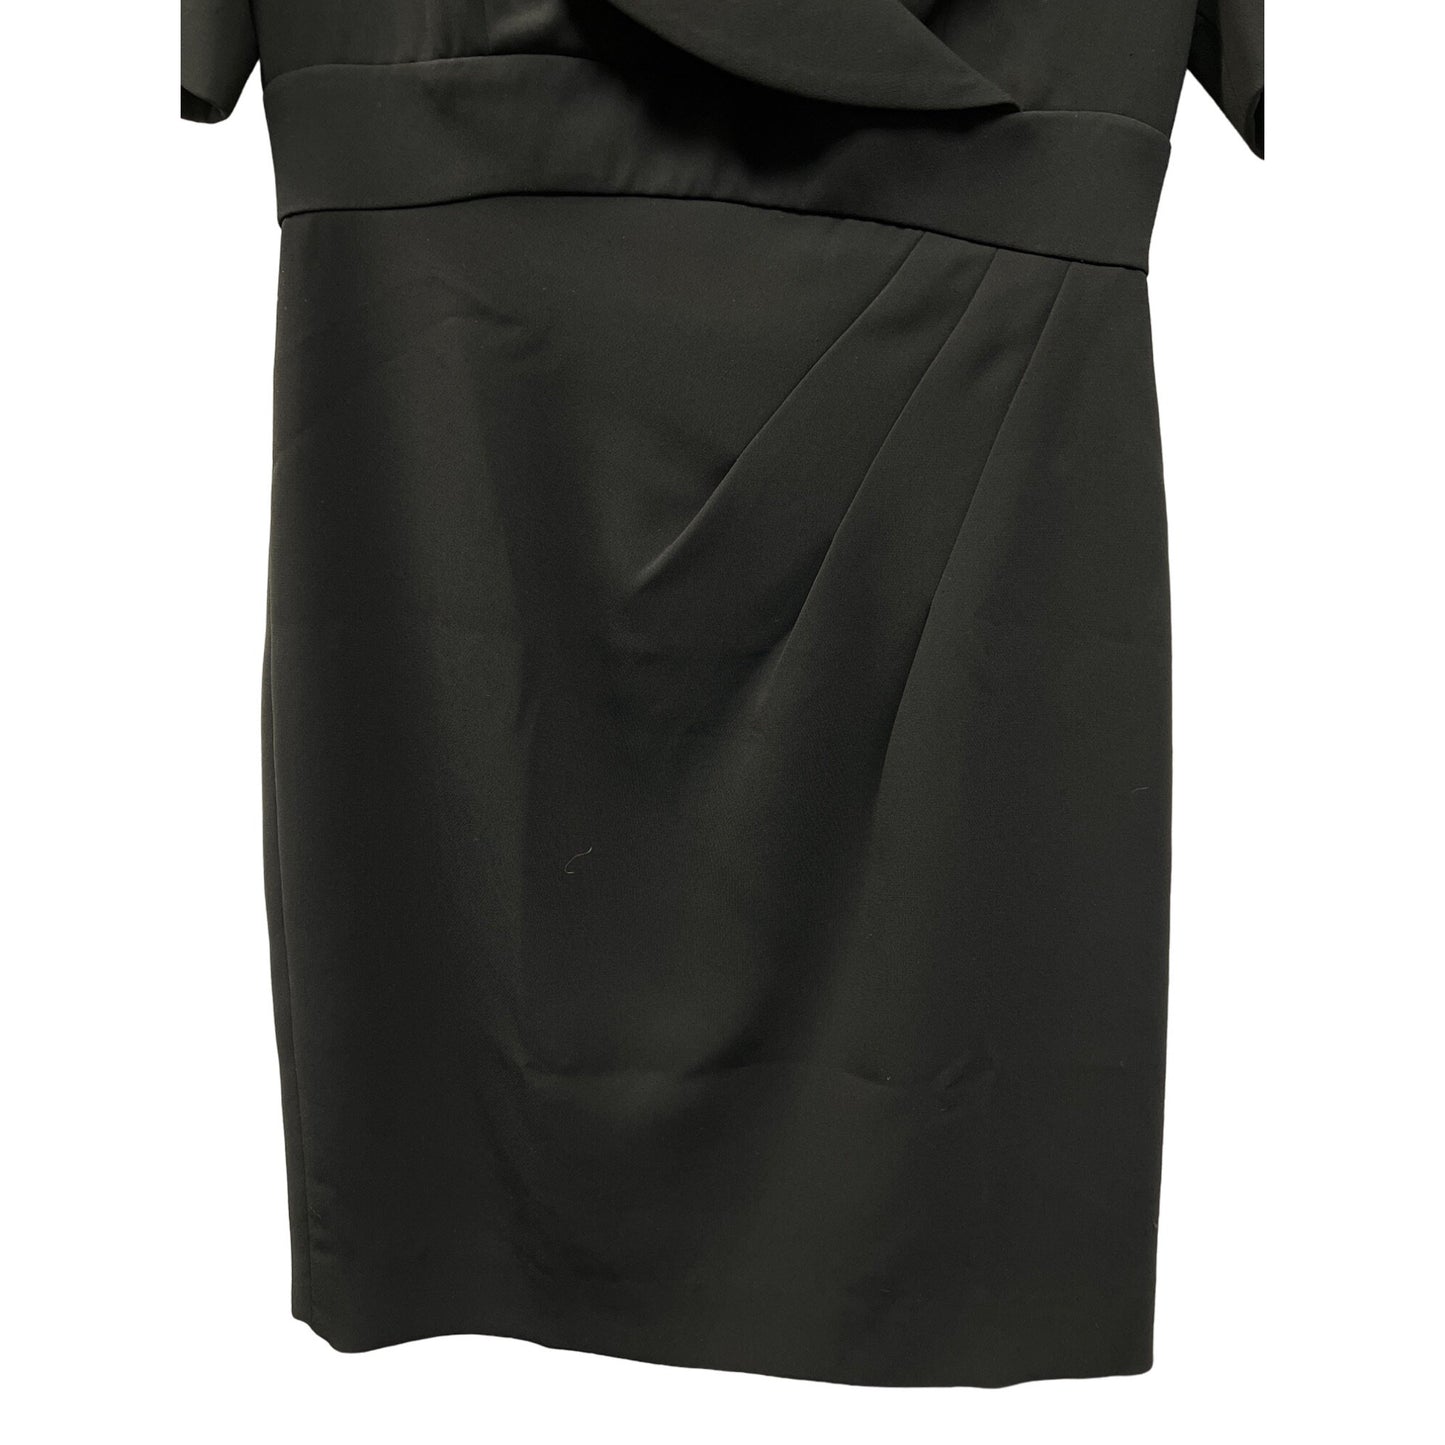 Chetta B Sherrie Bloom Peter Noviello Black Short Sleeve Occasion Dress